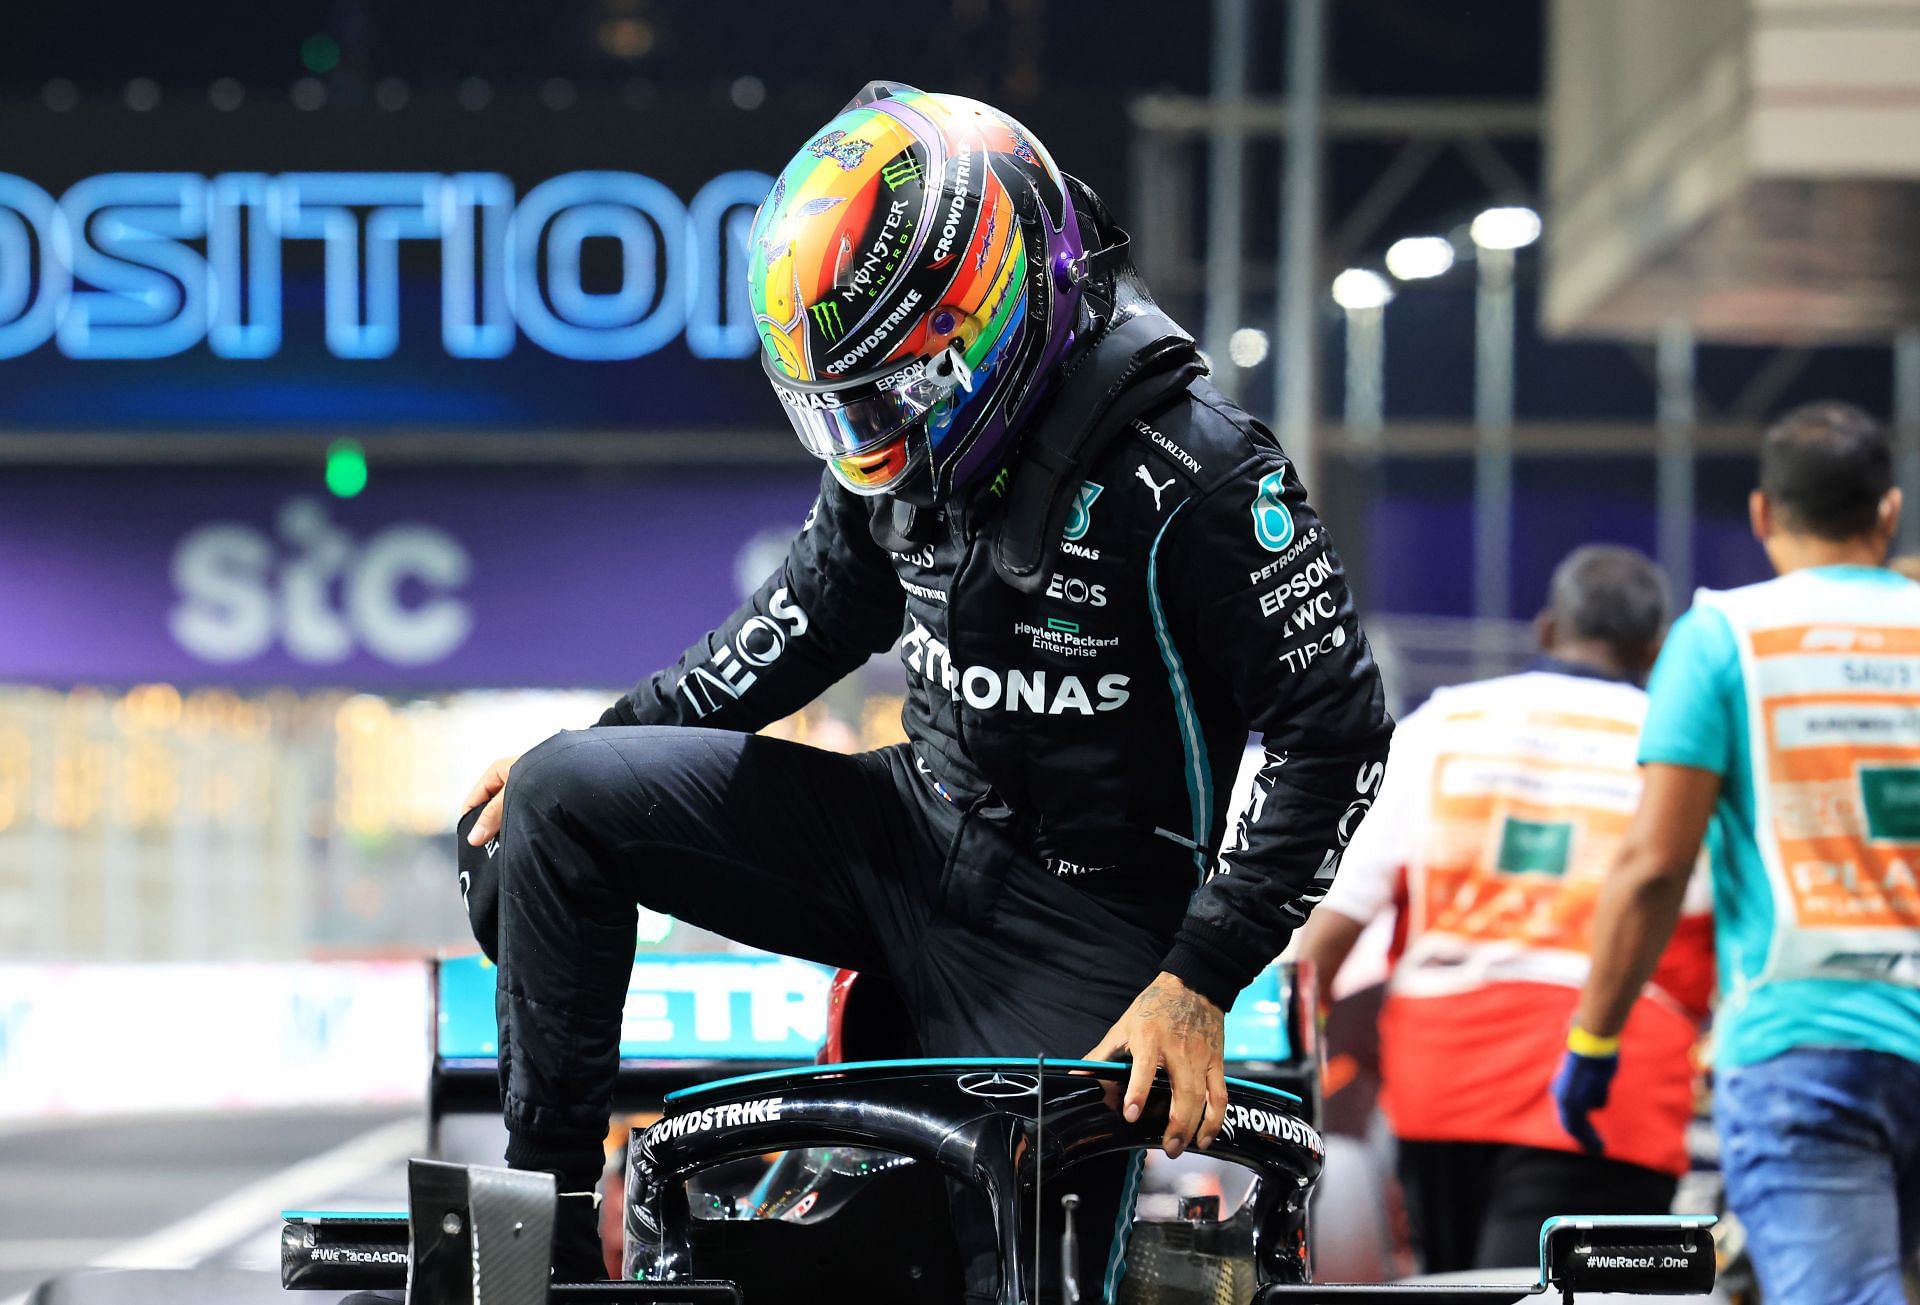 F1 Grand Prix of Saudi Arabia - Lewis Hamilton